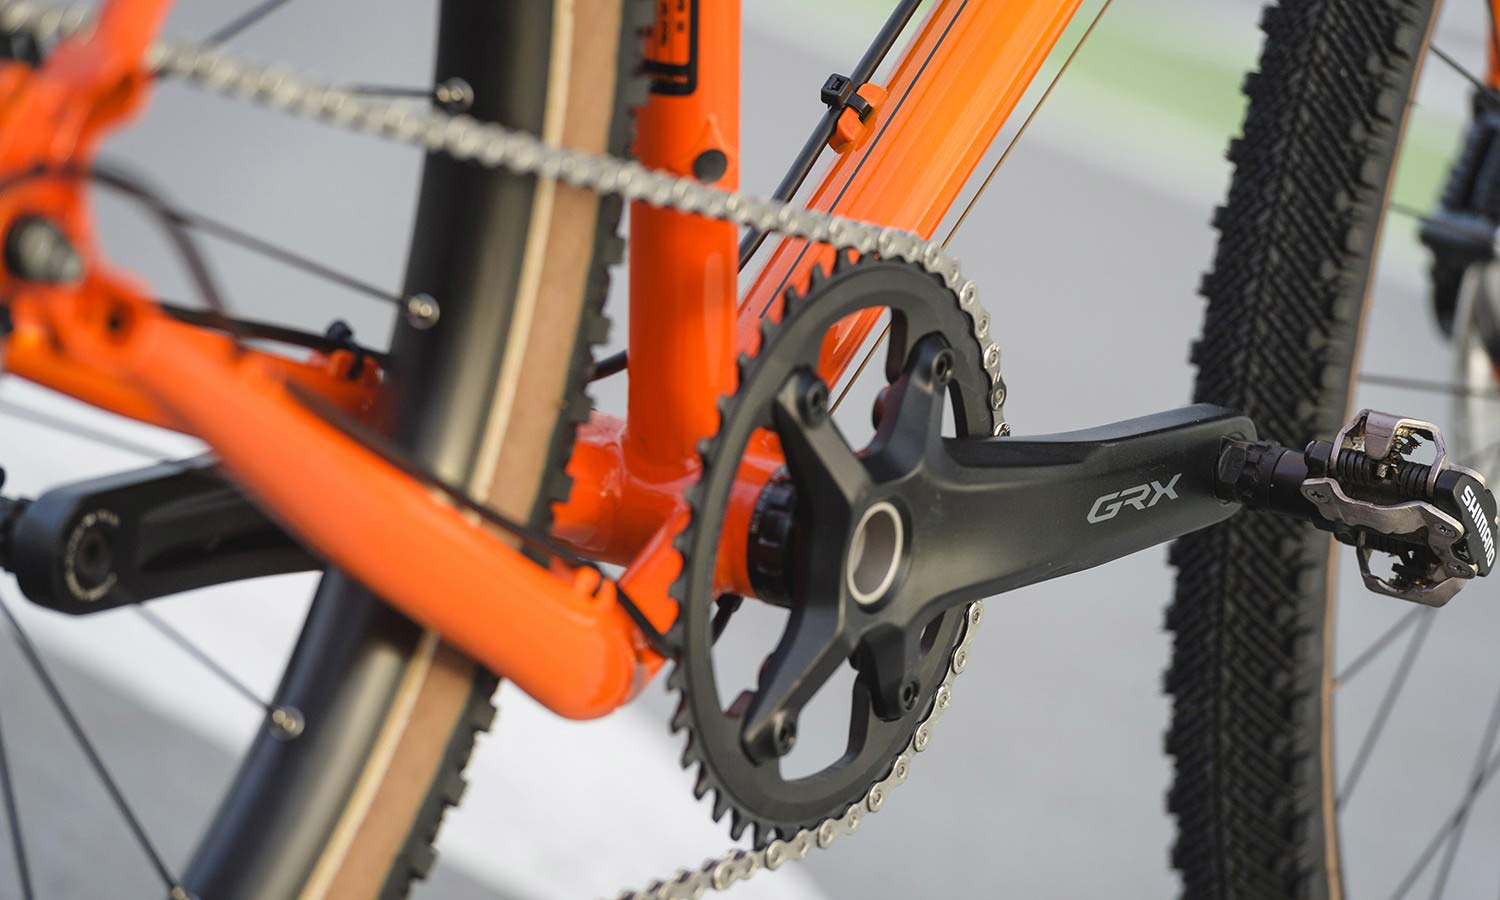 2020 Genesis Fugio Reynolds 725 steel adventure gravel bike frameset GRX